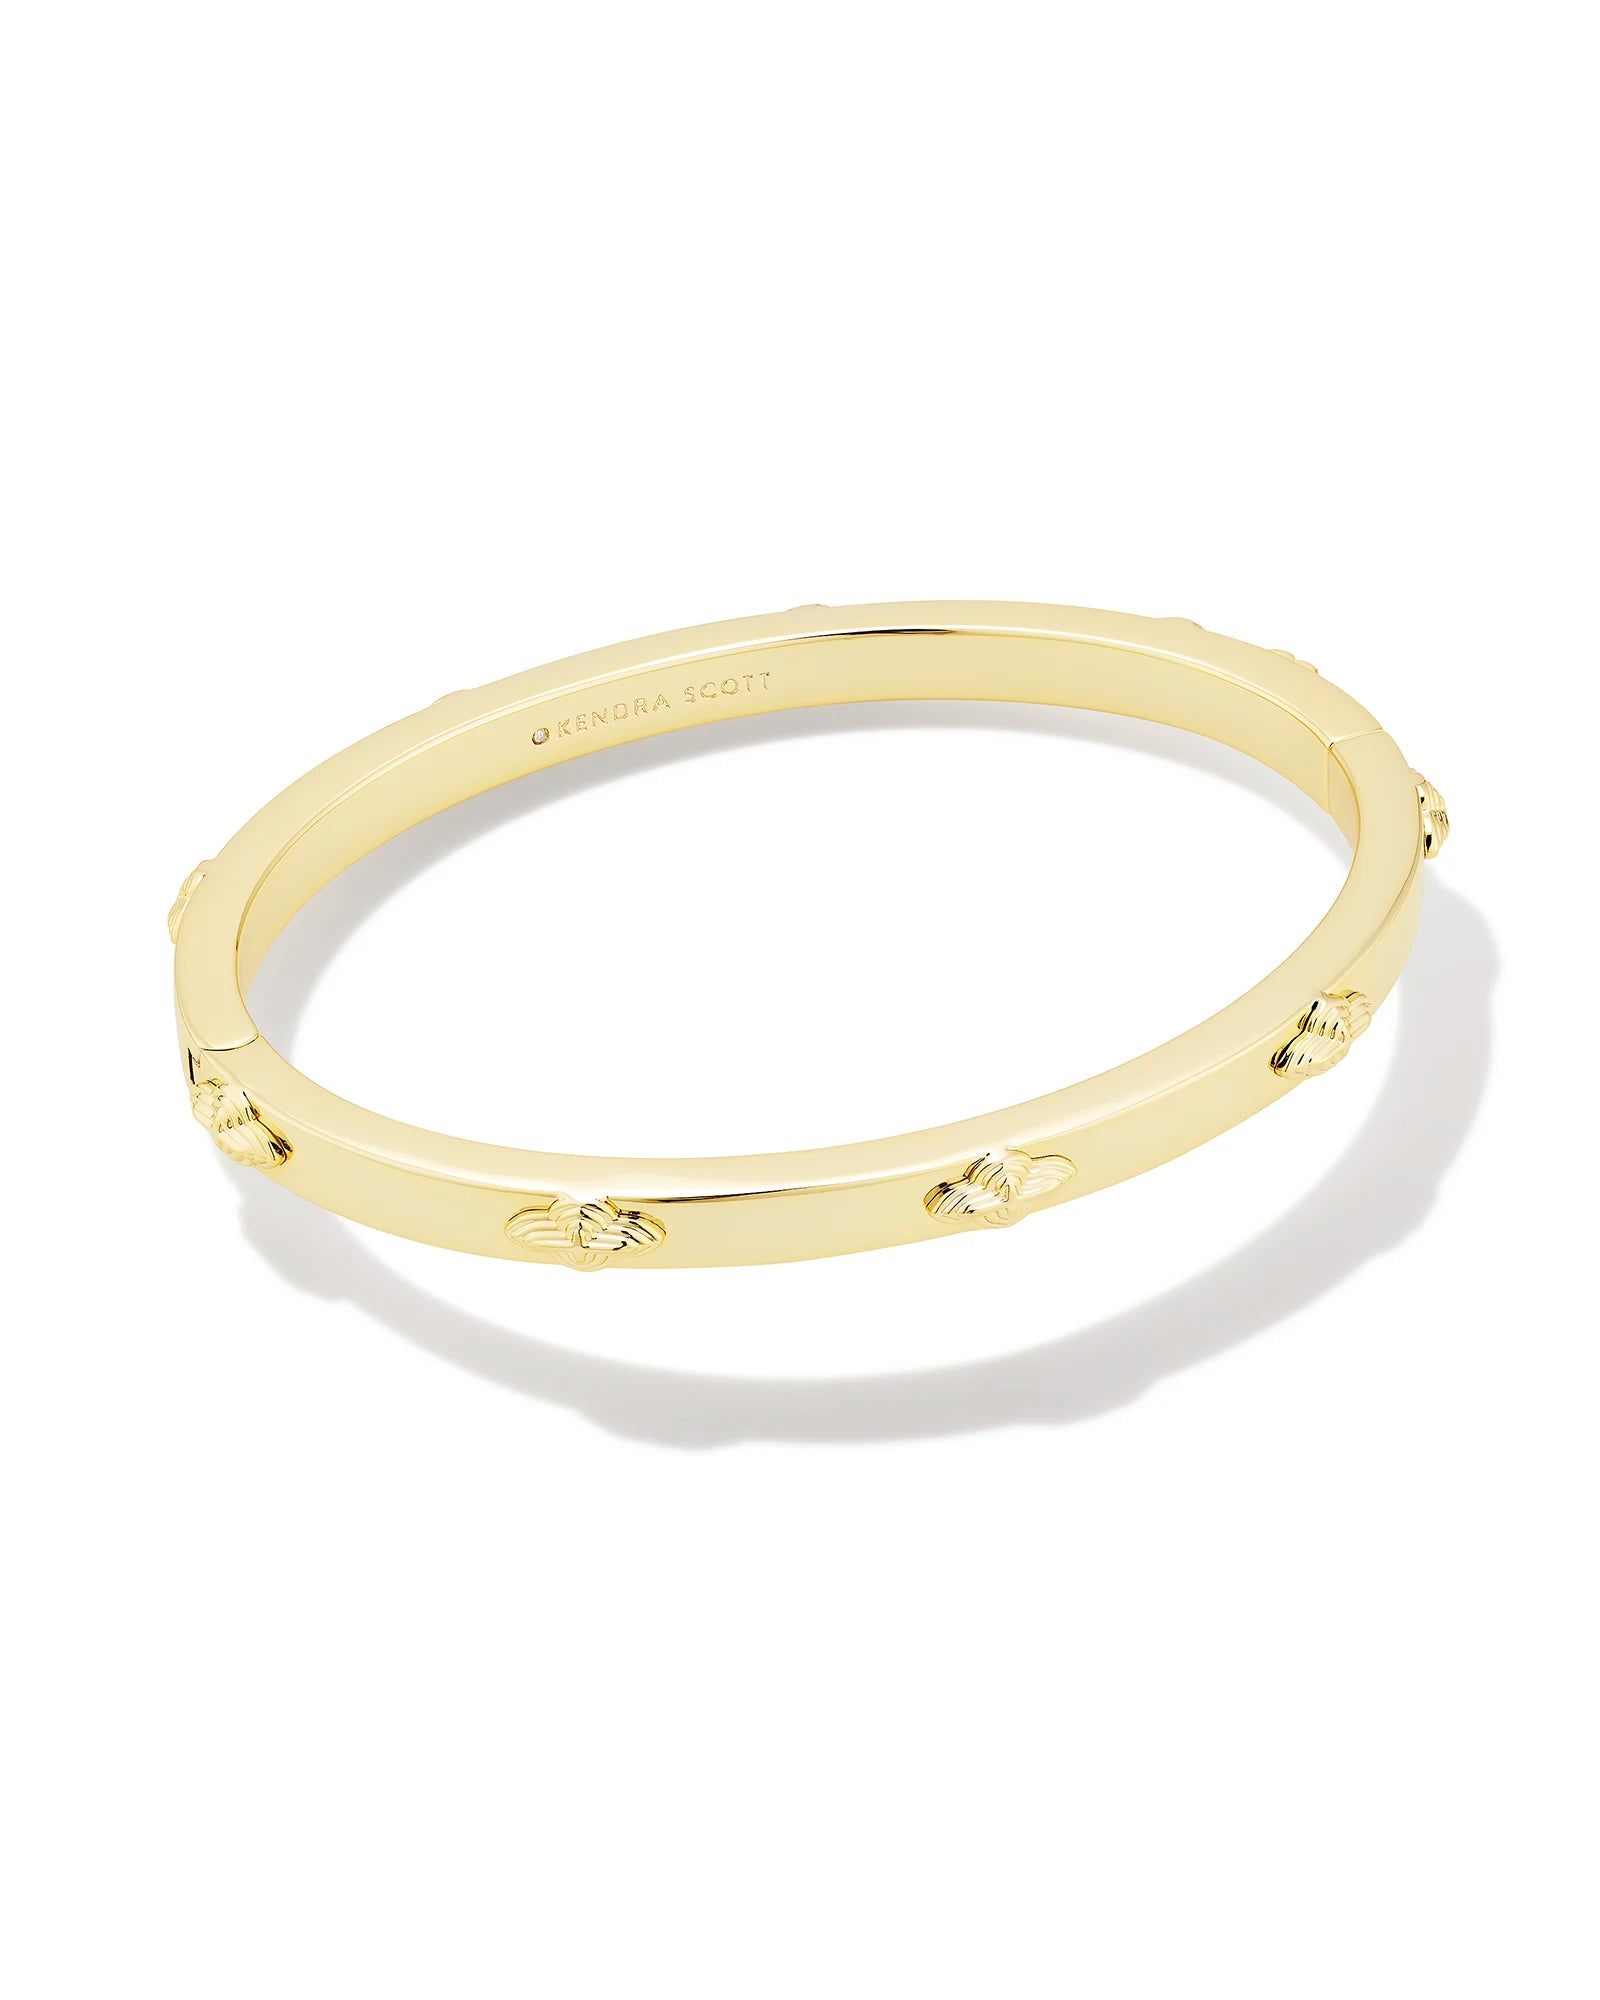 KENDRA SCOTT- Abbie Metal Bangle Bracelet in Gold Metal M/L